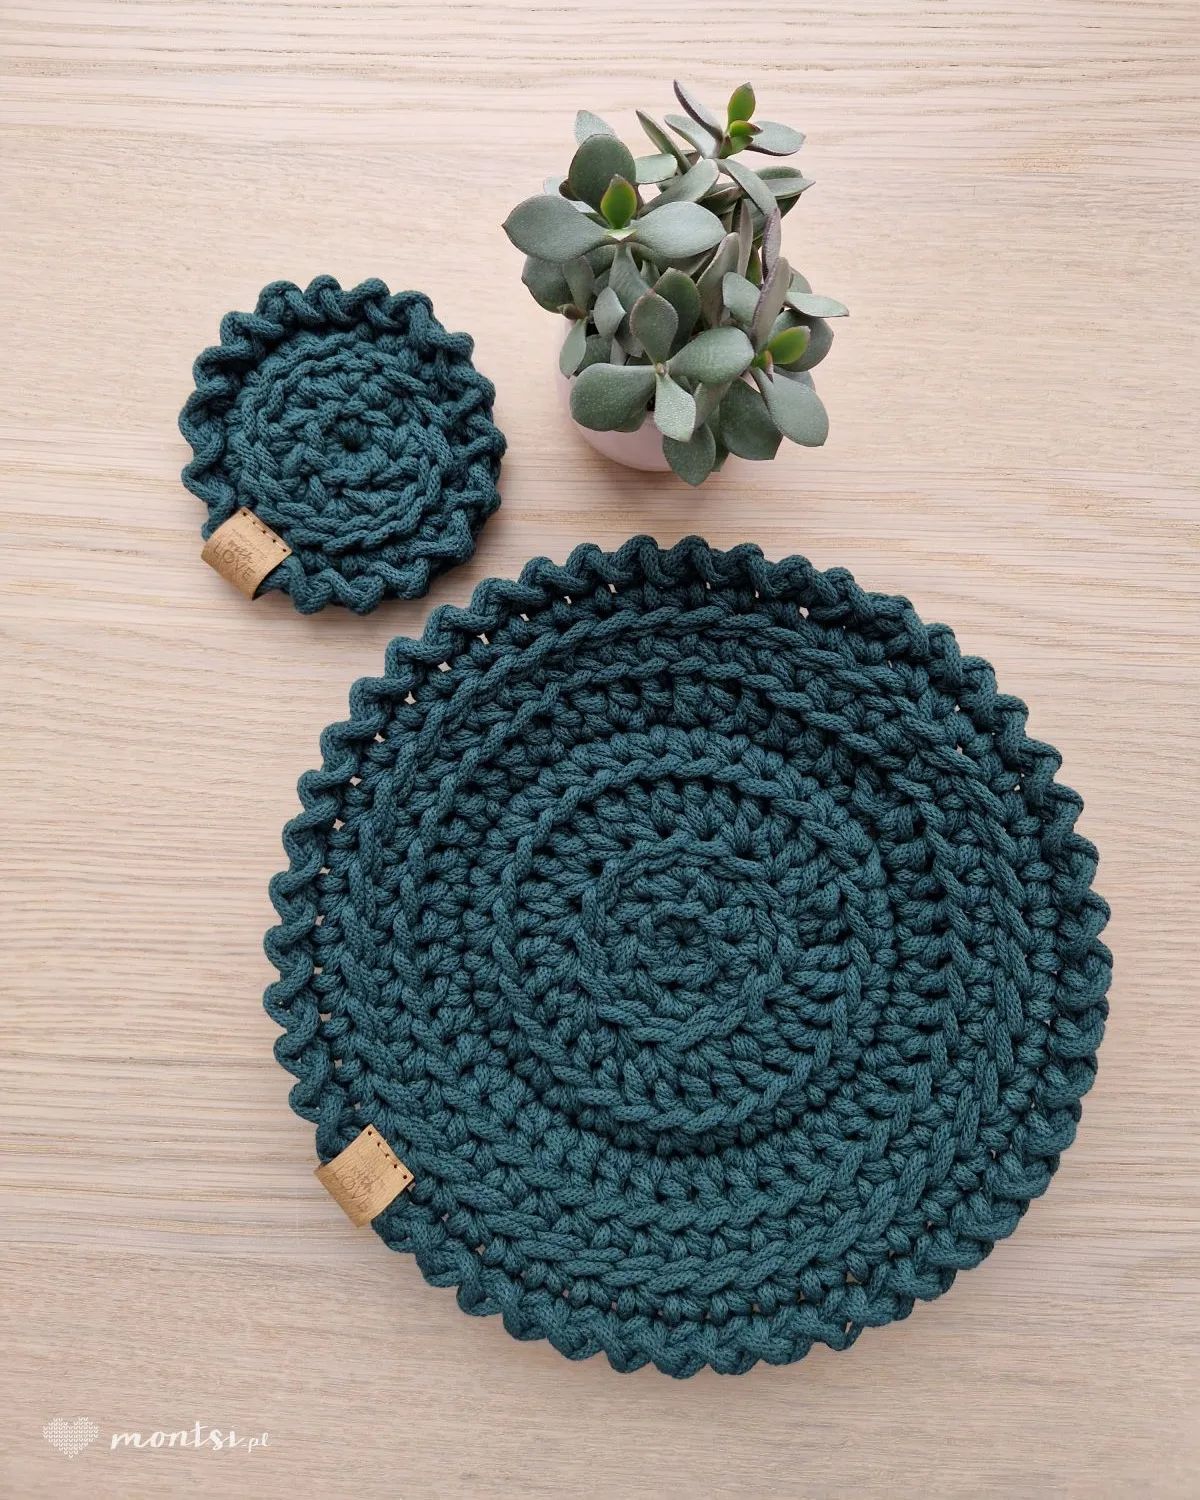 A tu Boho się zieleni..
~
#podkładkizesznurka #bohohome #handmadedecor #cottoncord #crochetproject #crocheteveryday #handmade #montsicrafts #crafts